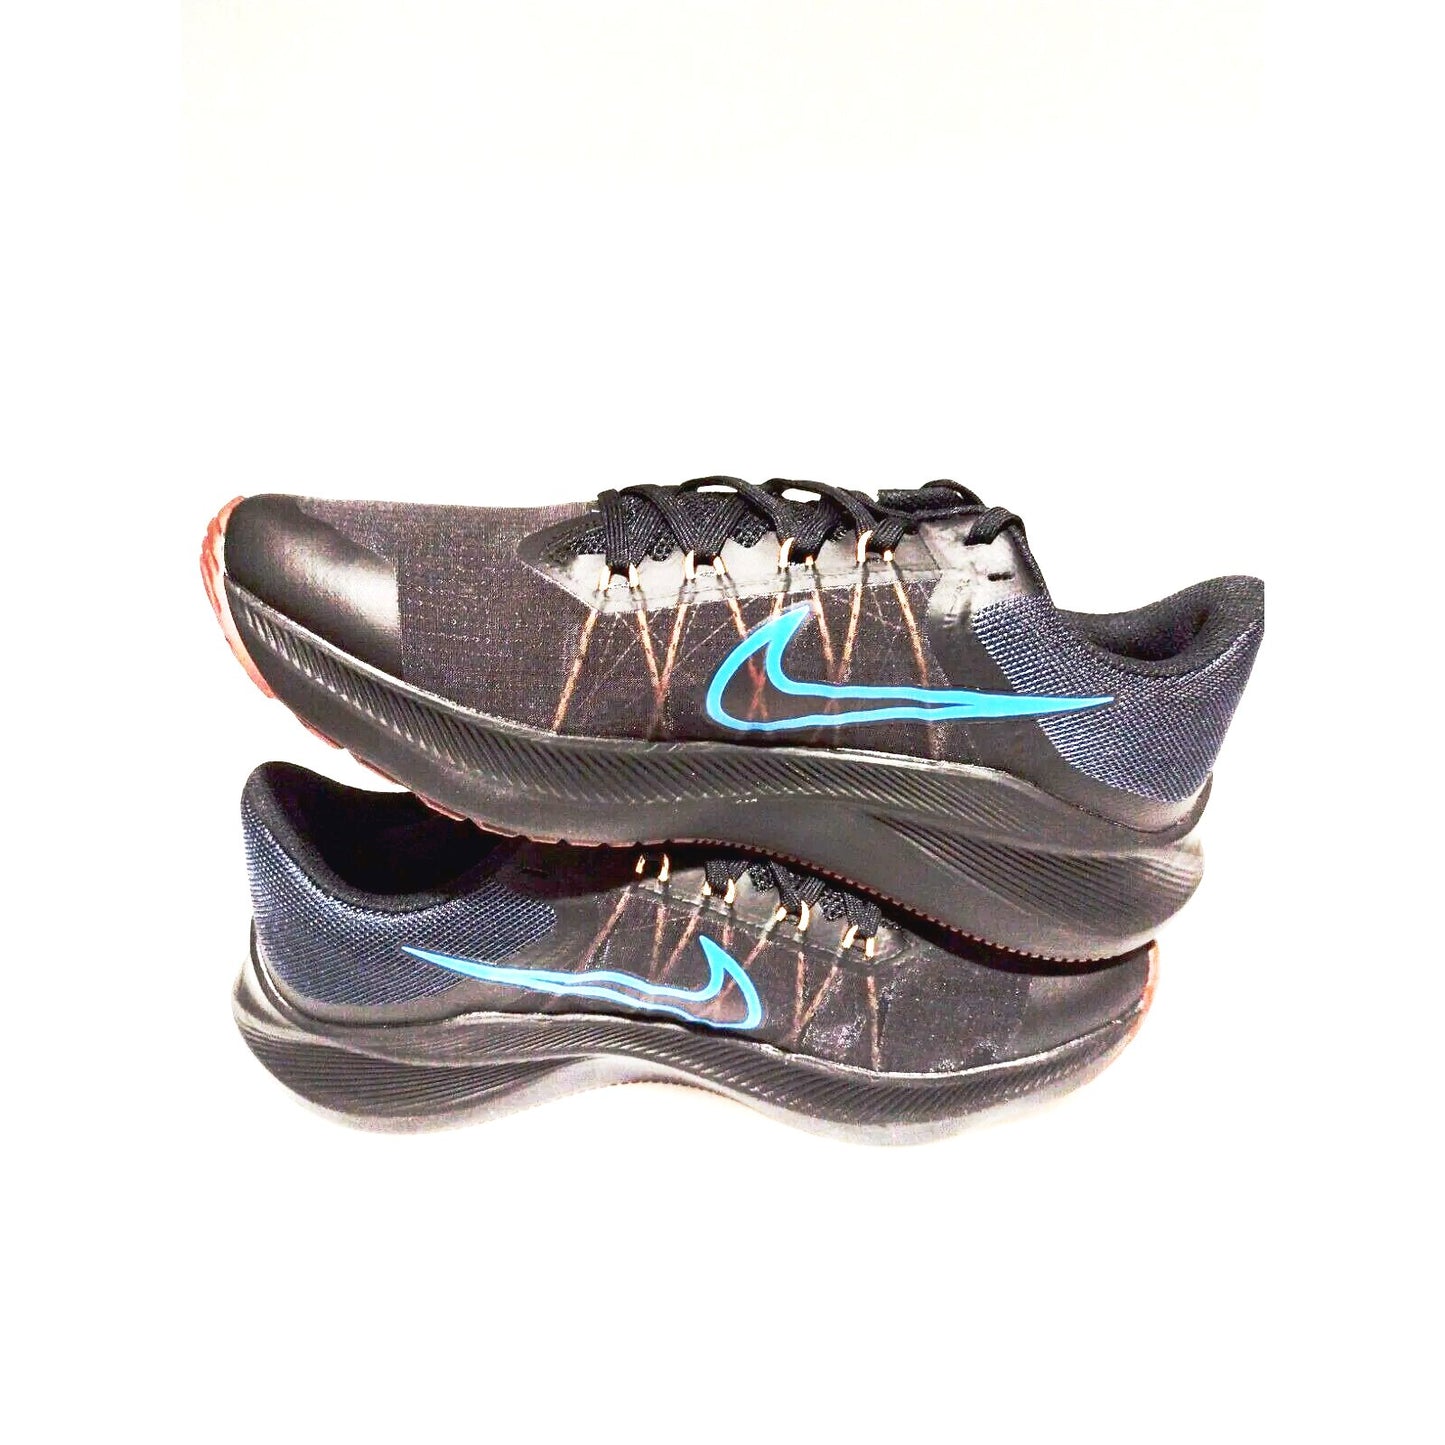 Nike zoom winflo 8 black photo blue running shoes size 12 us men